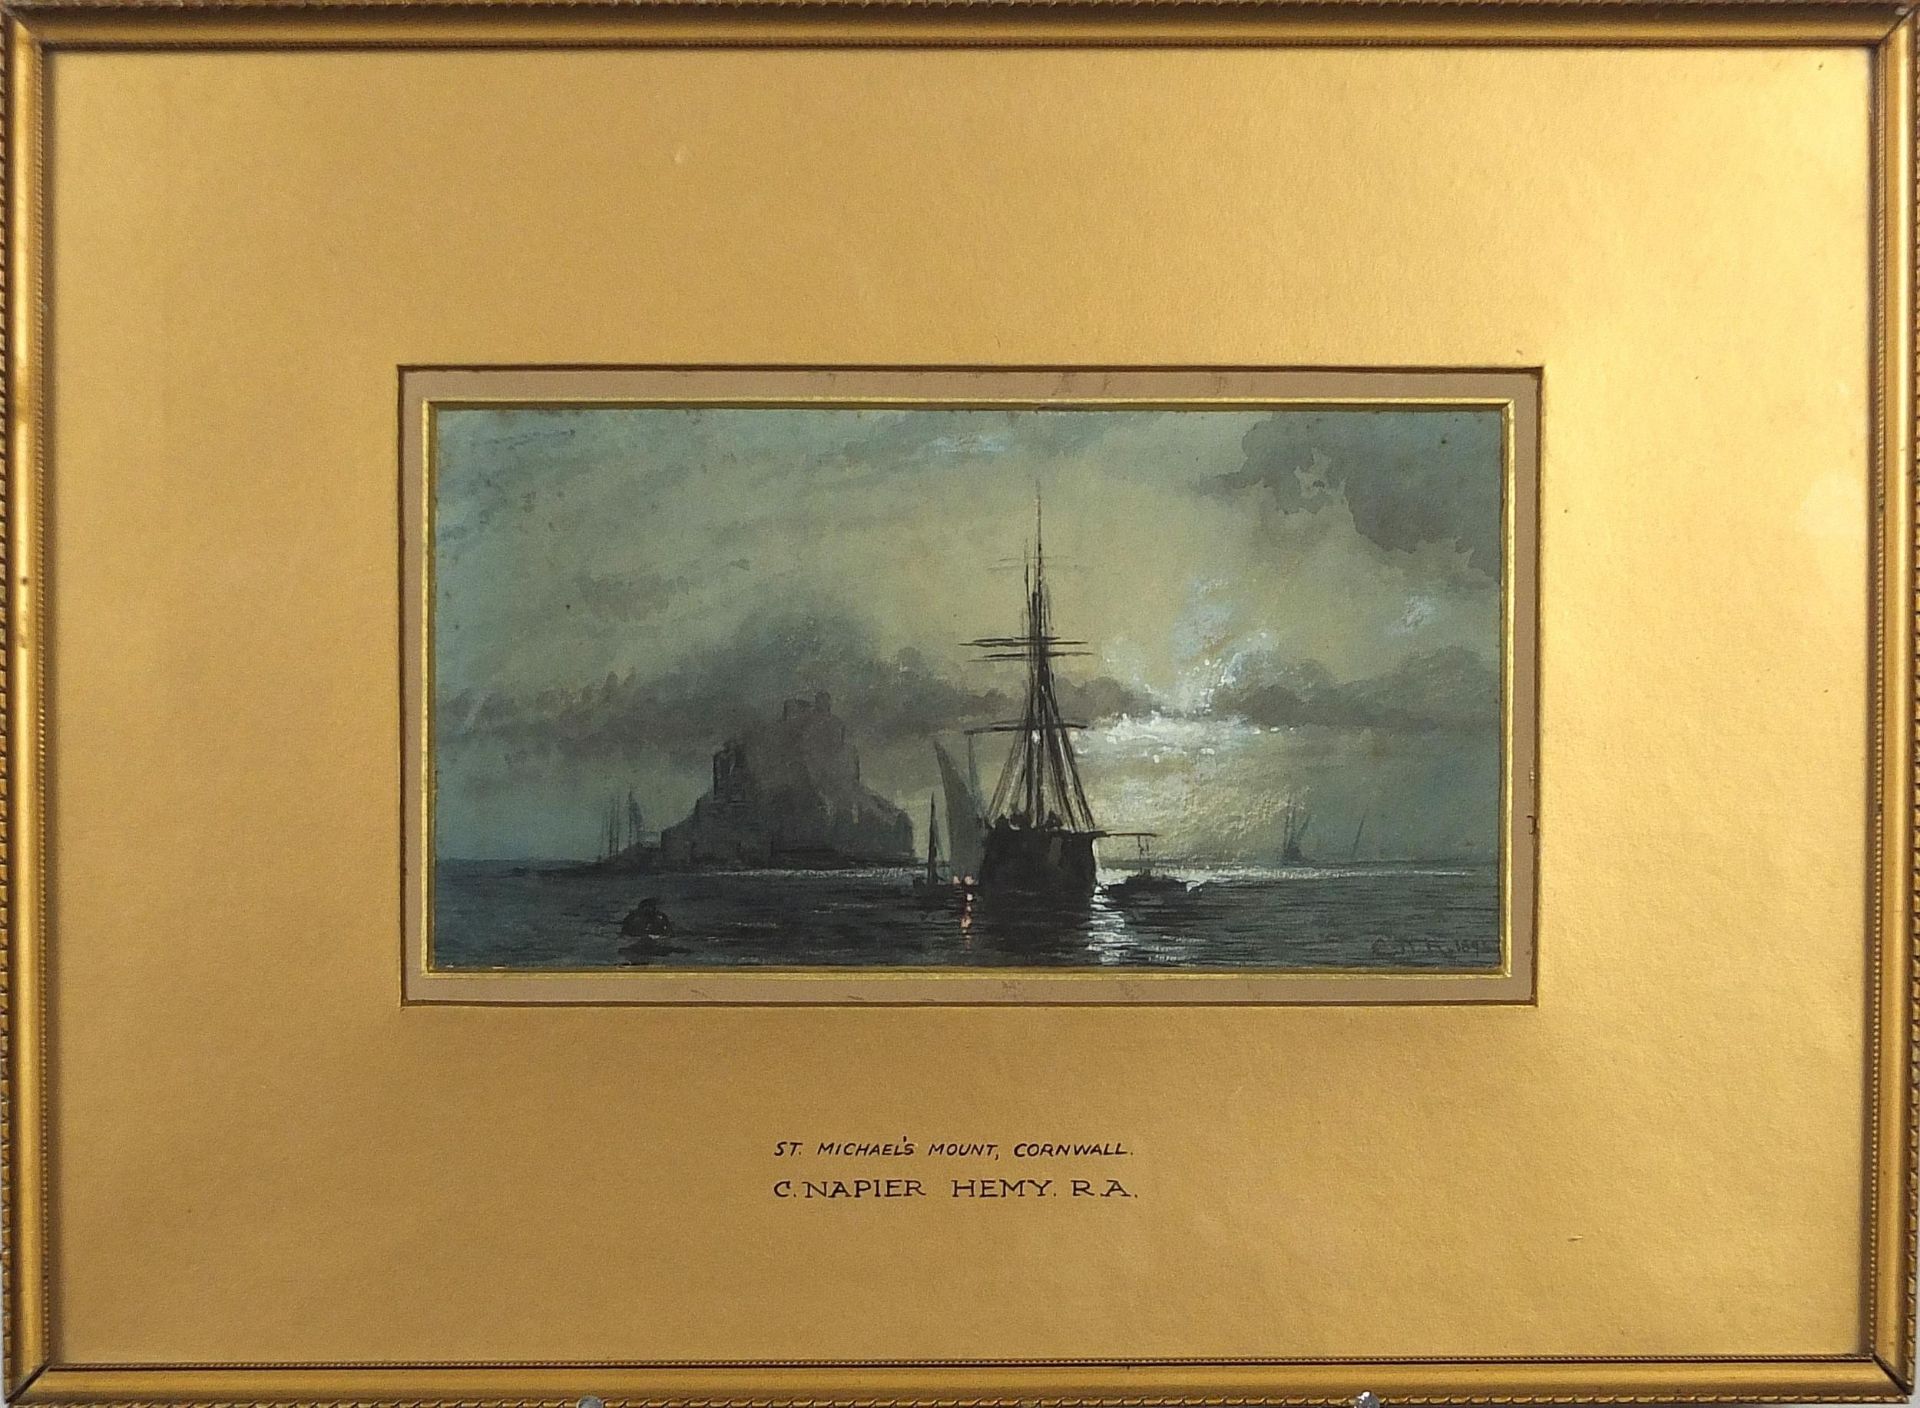 Charles Napier Hemy 1895 - St Michael's Mount, Cornwall, late 19th century maritime interest - Image 2 of 5